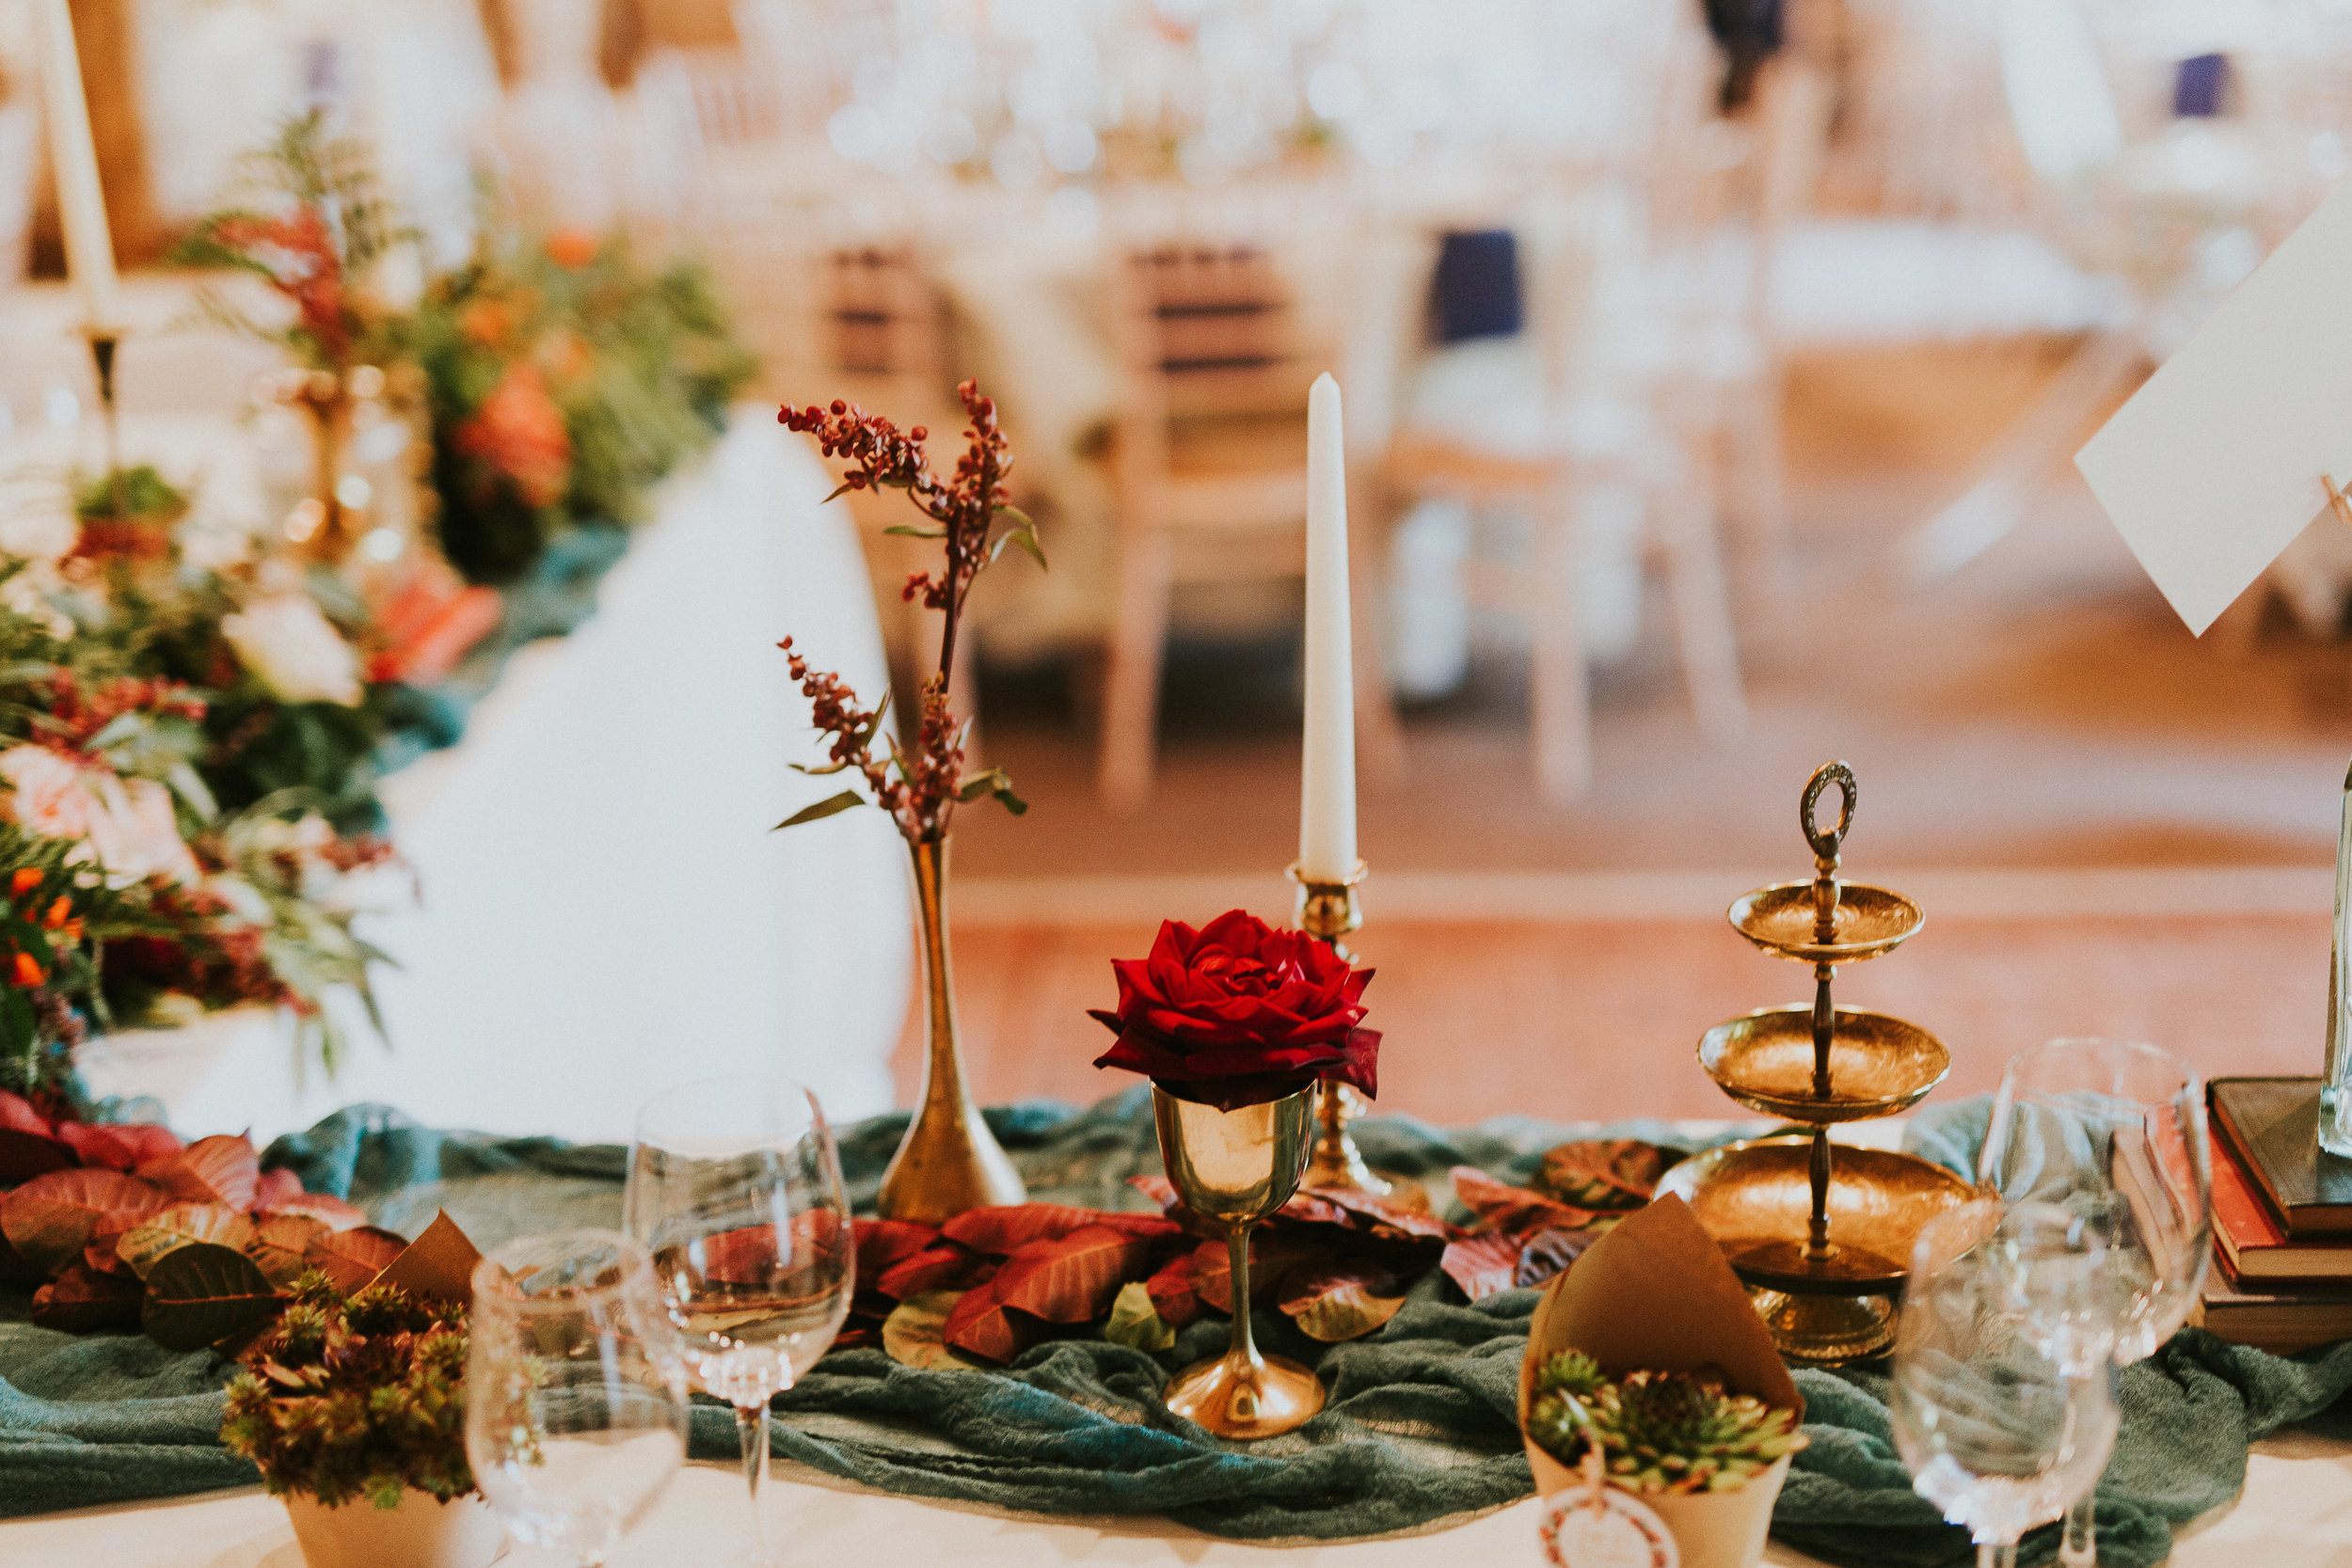 Woodland themed wedding reception tables